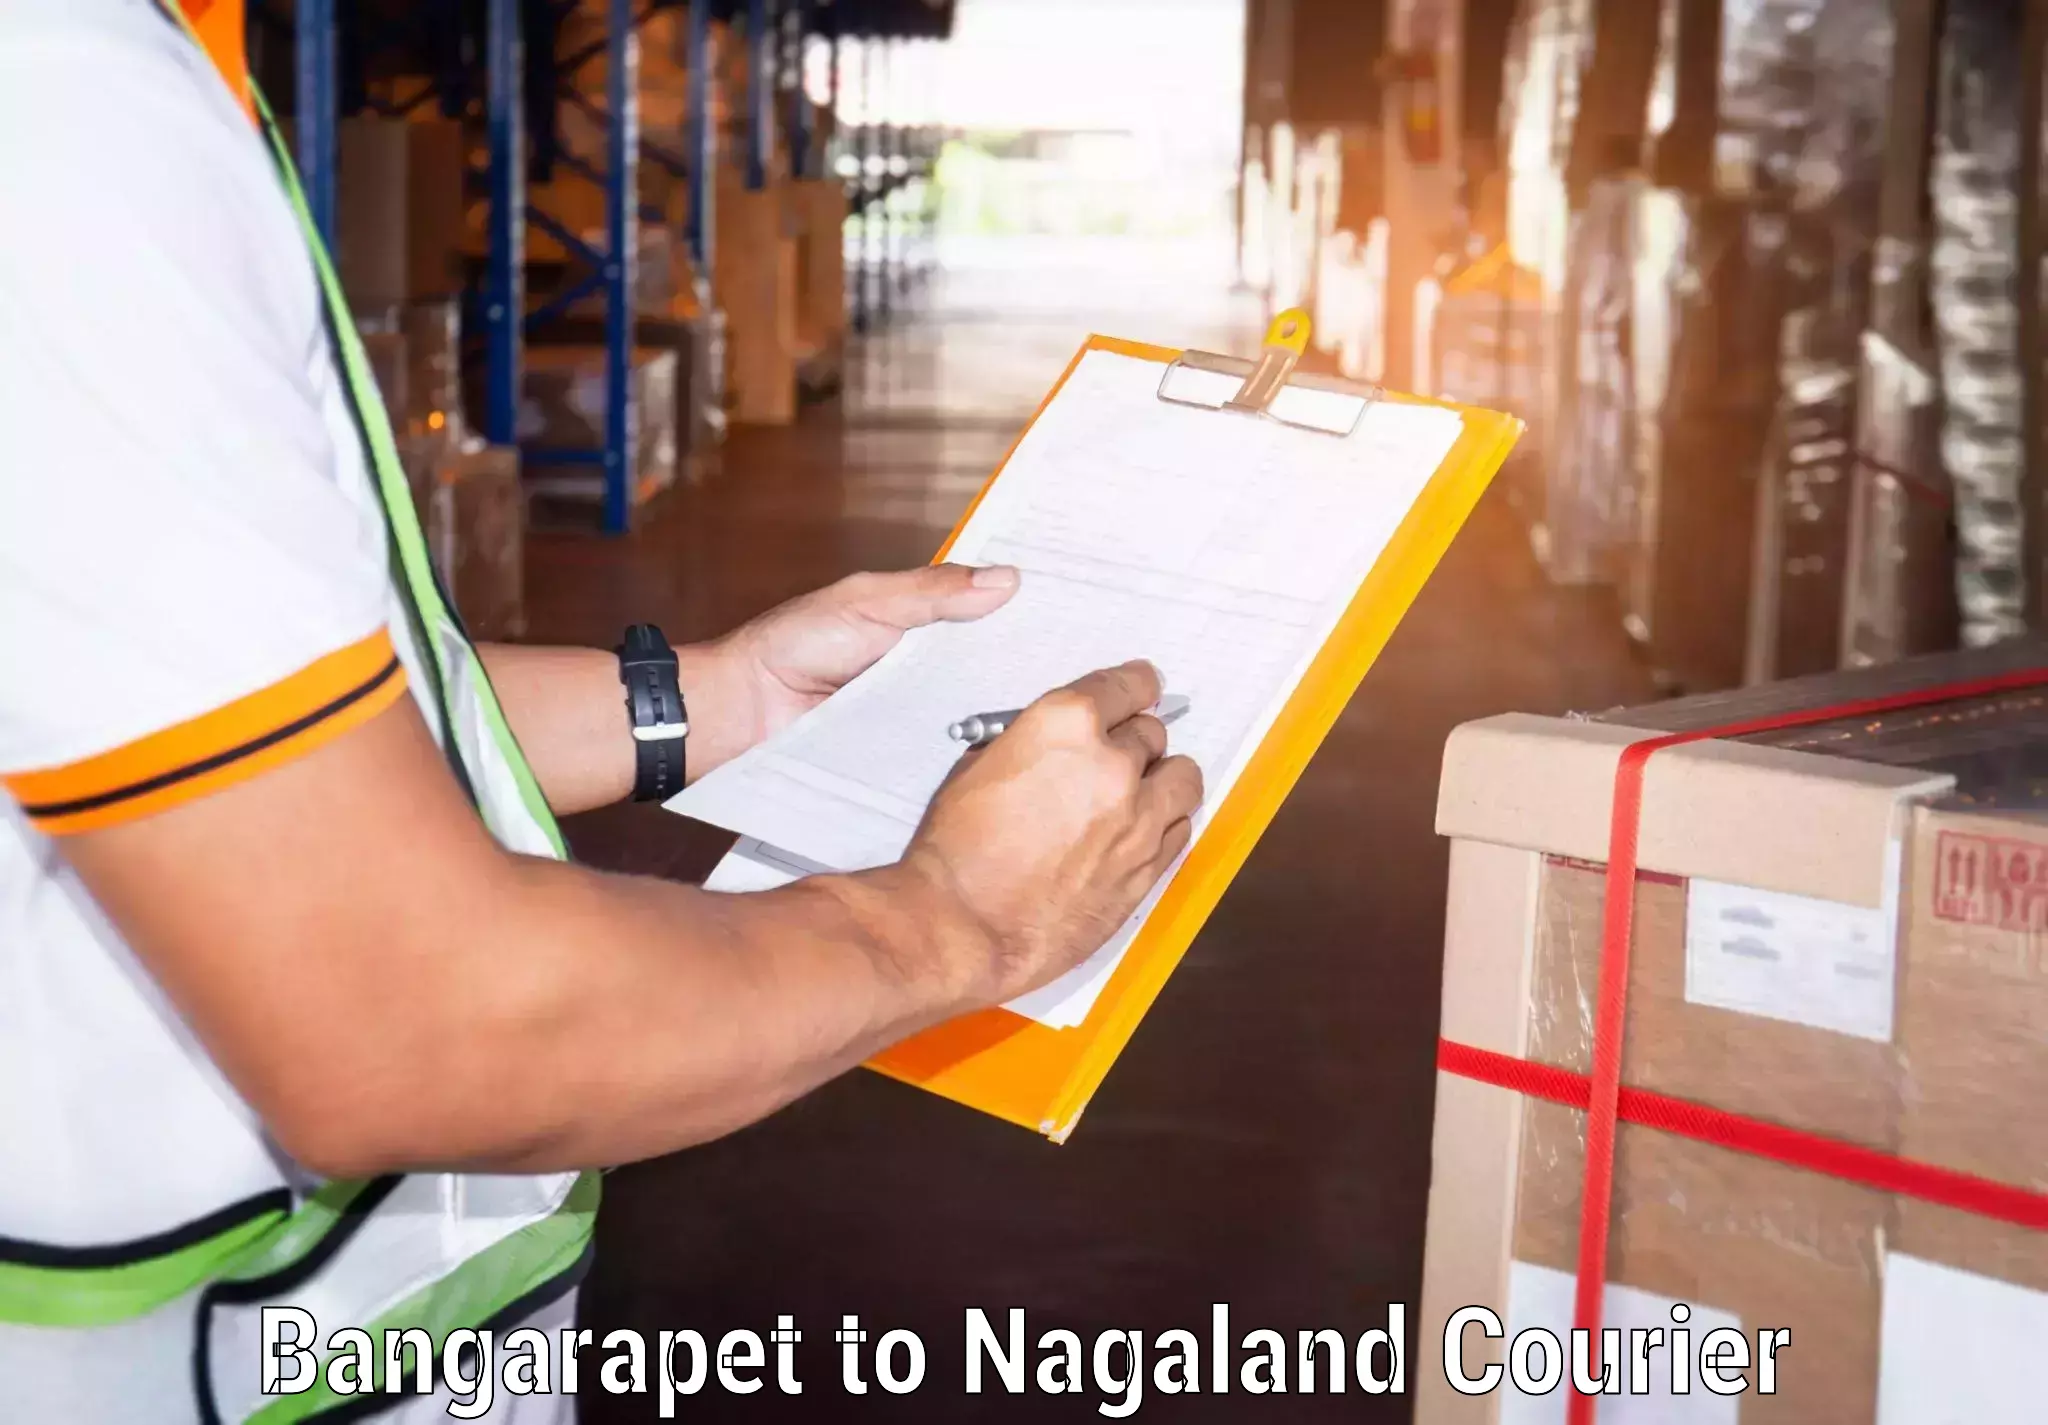 International parcel service Bangarapet to Dimapur